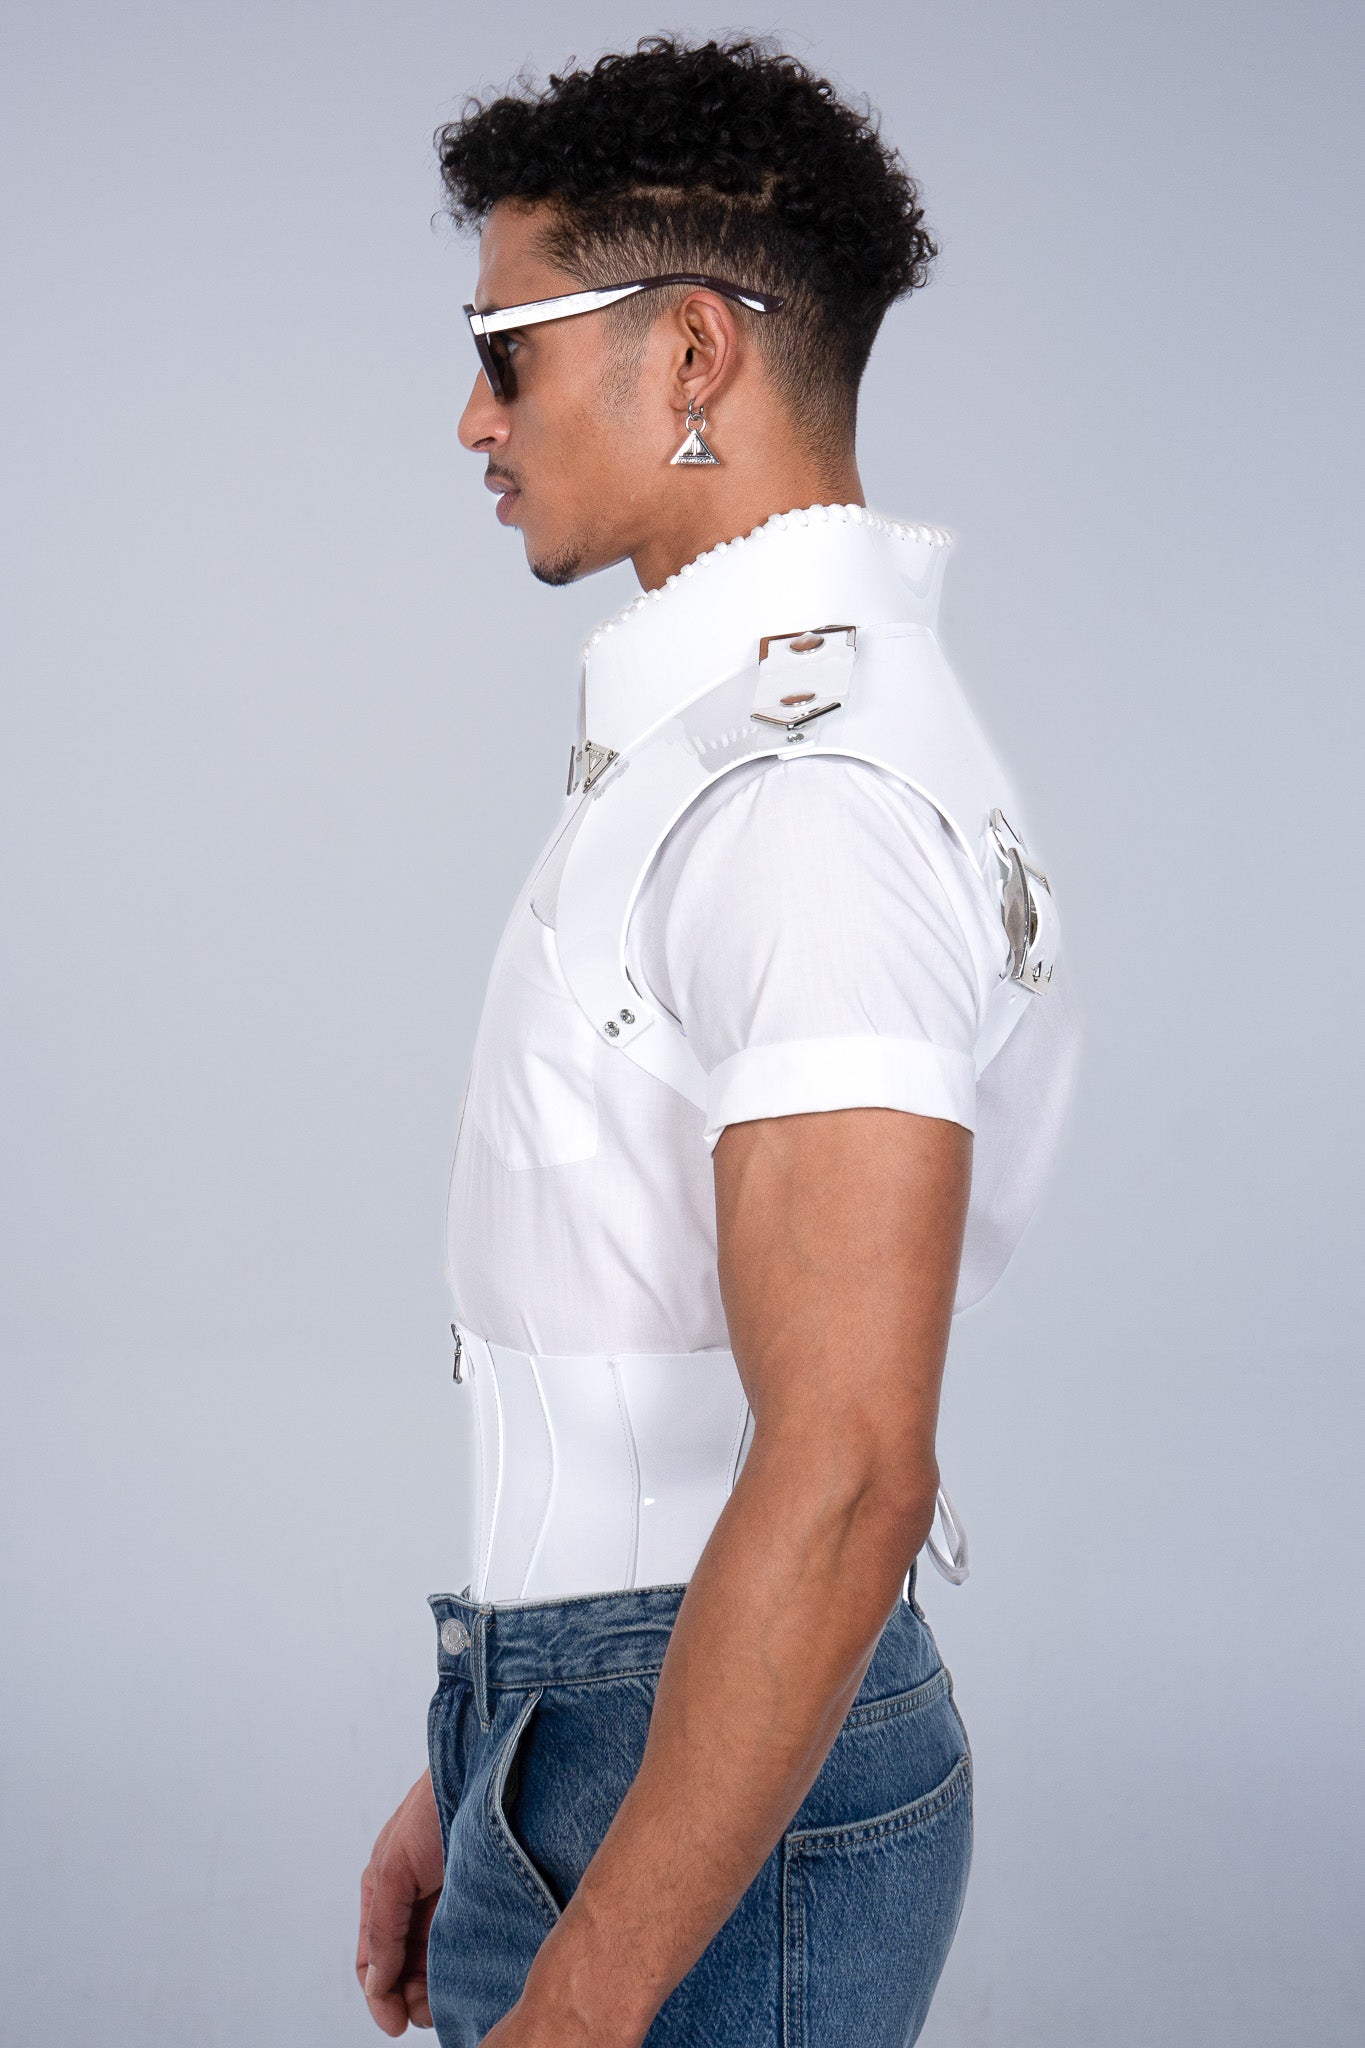 Elegant glossy white Violetta corset belt for adding sophistication to your attire